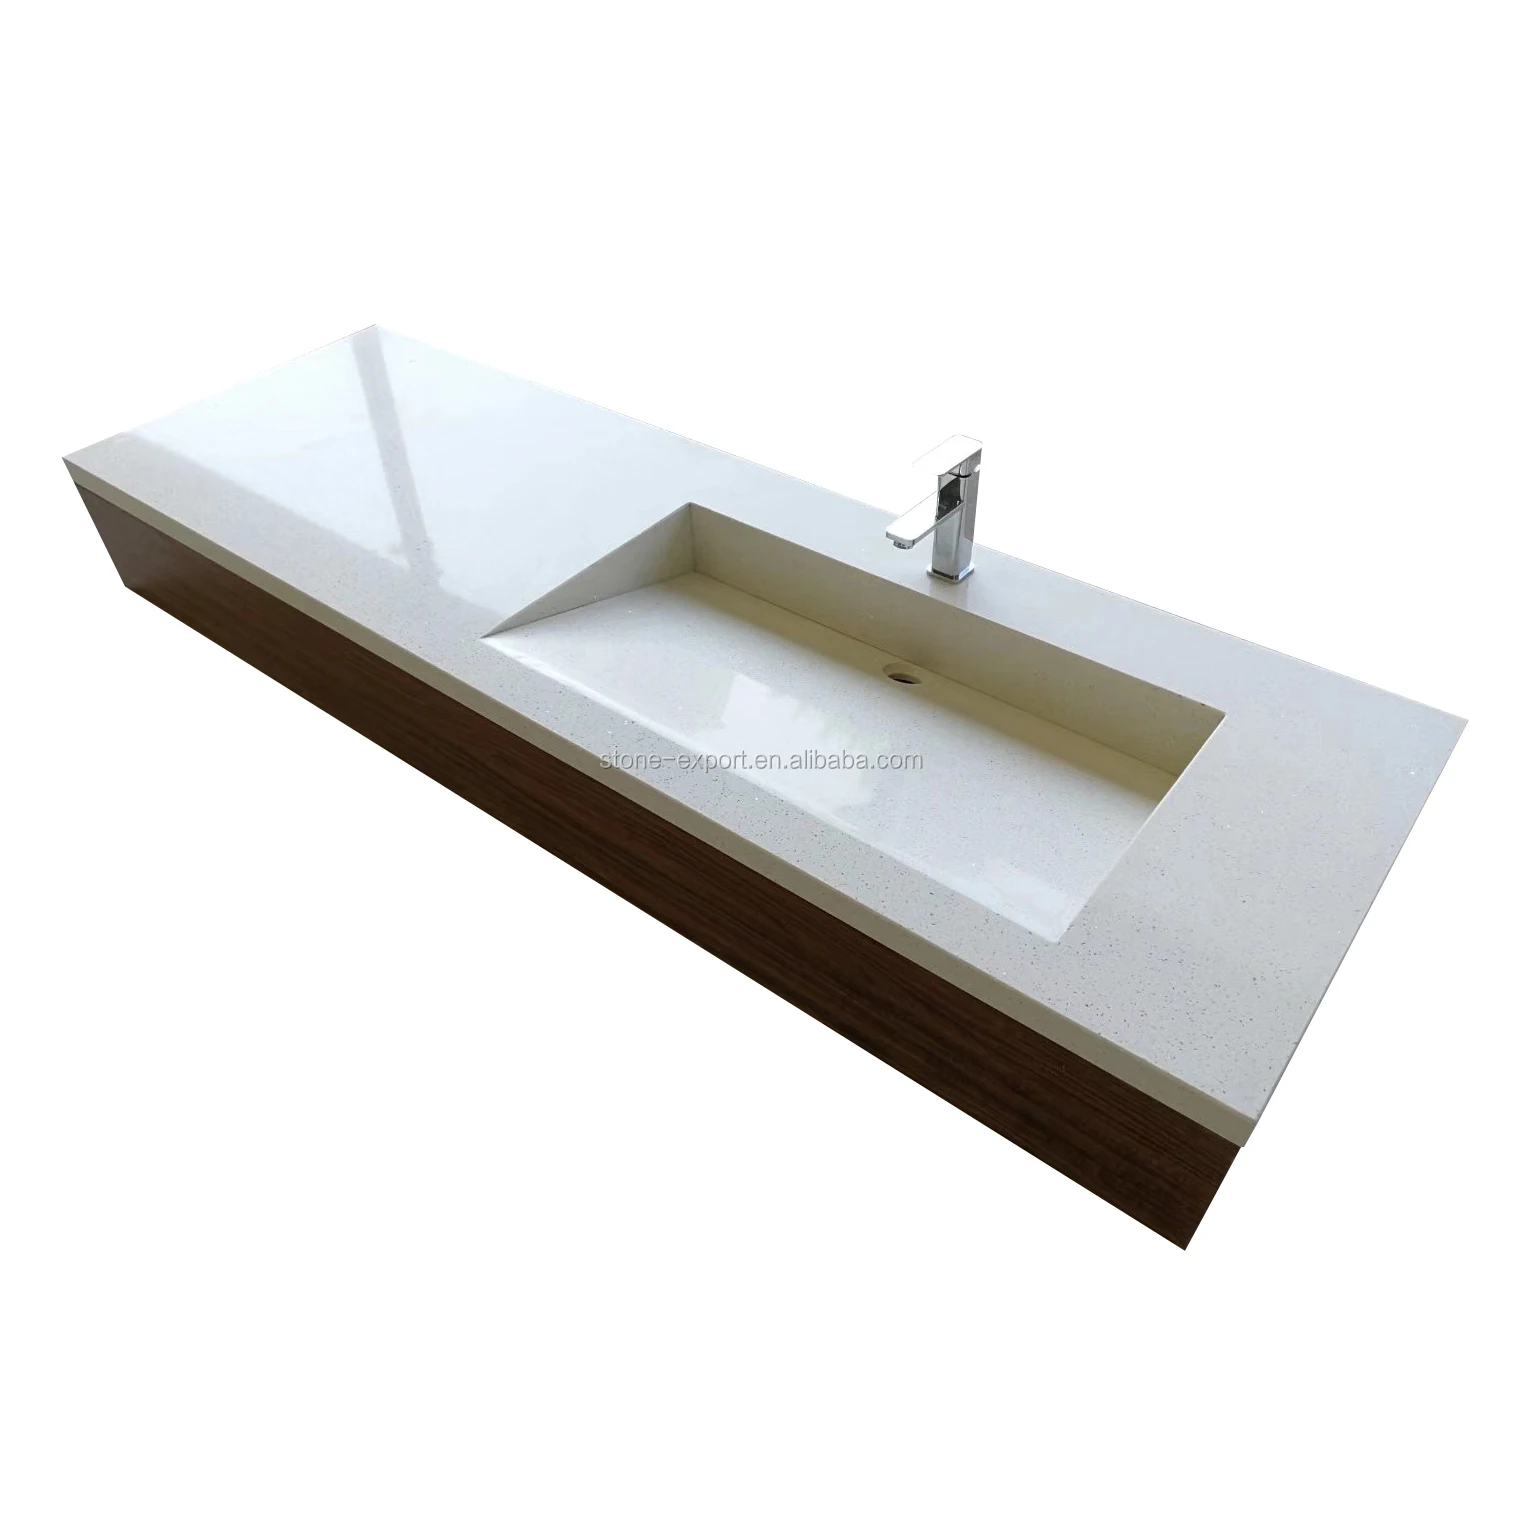 White Crystal Quartz Stone Molded Sink Vanity Top Acrylic Bathroom Flat Vanity Tops High Quality Integral Basin Buy Quartz Stone Molded Sink Vanity Top Flat Vanity Tops Acrylic Bathroom Vanity Top Product On